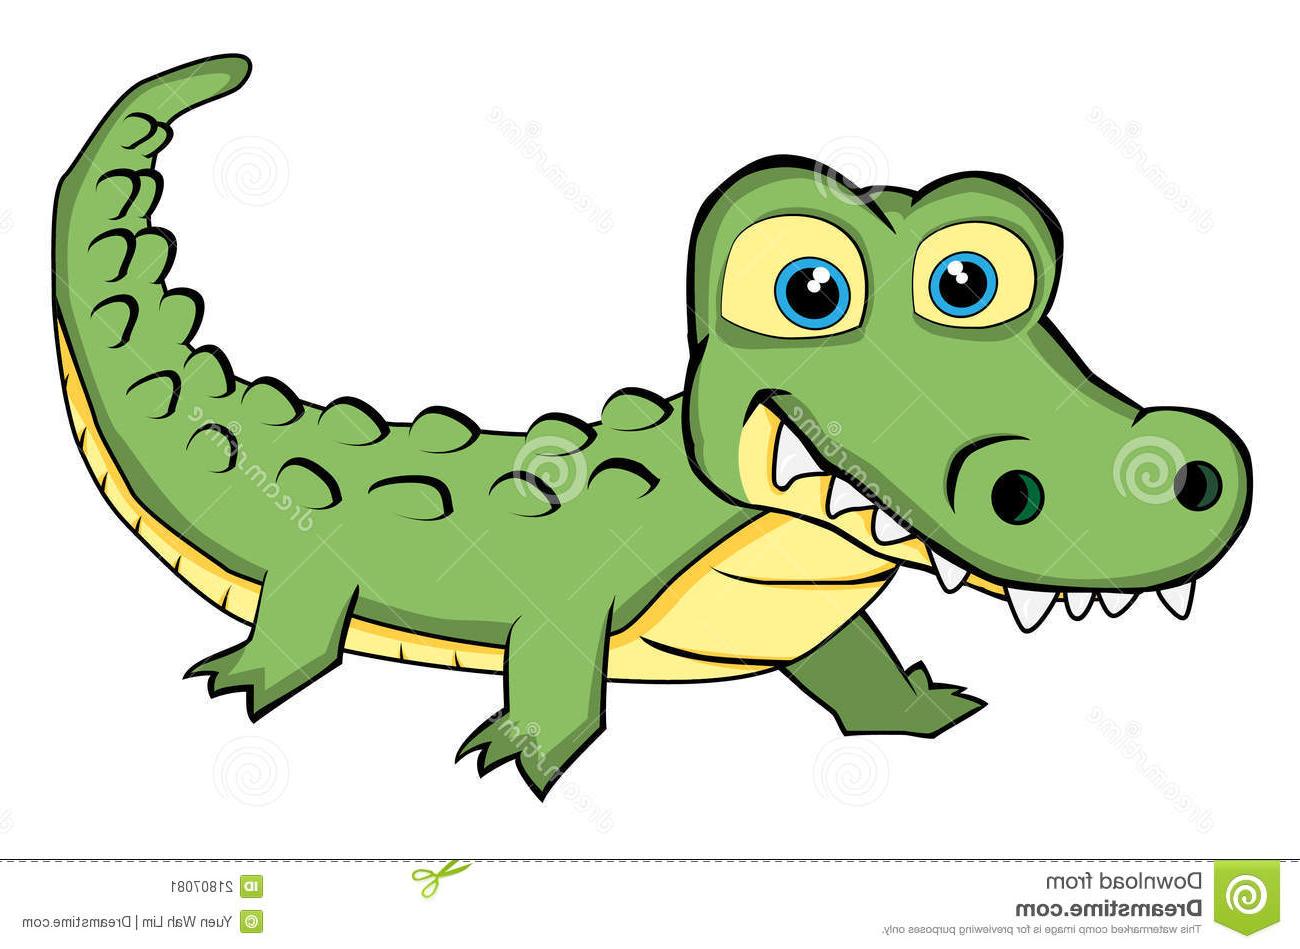 Crocodile clipart images.